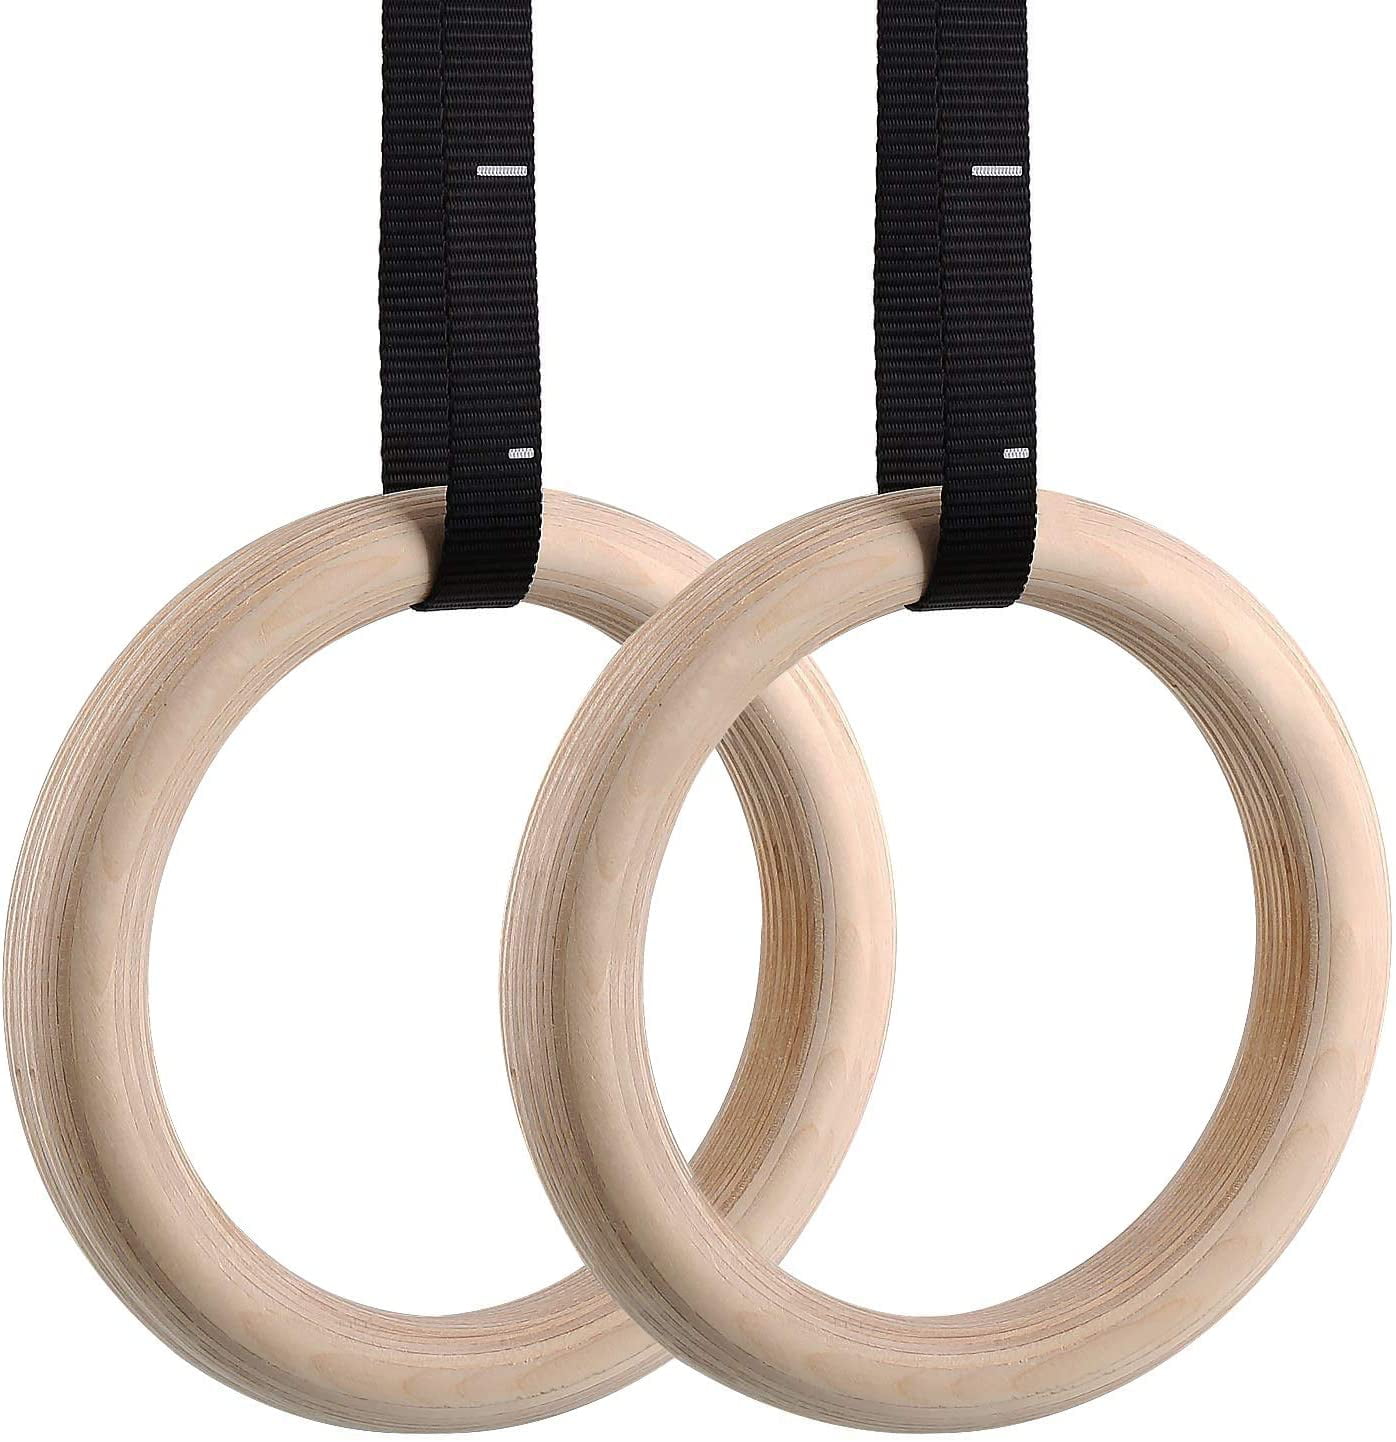 Magnifiq Birch Wood Gymnastics Rings Durable Gymnastic Rings w/Adjustable Straps 